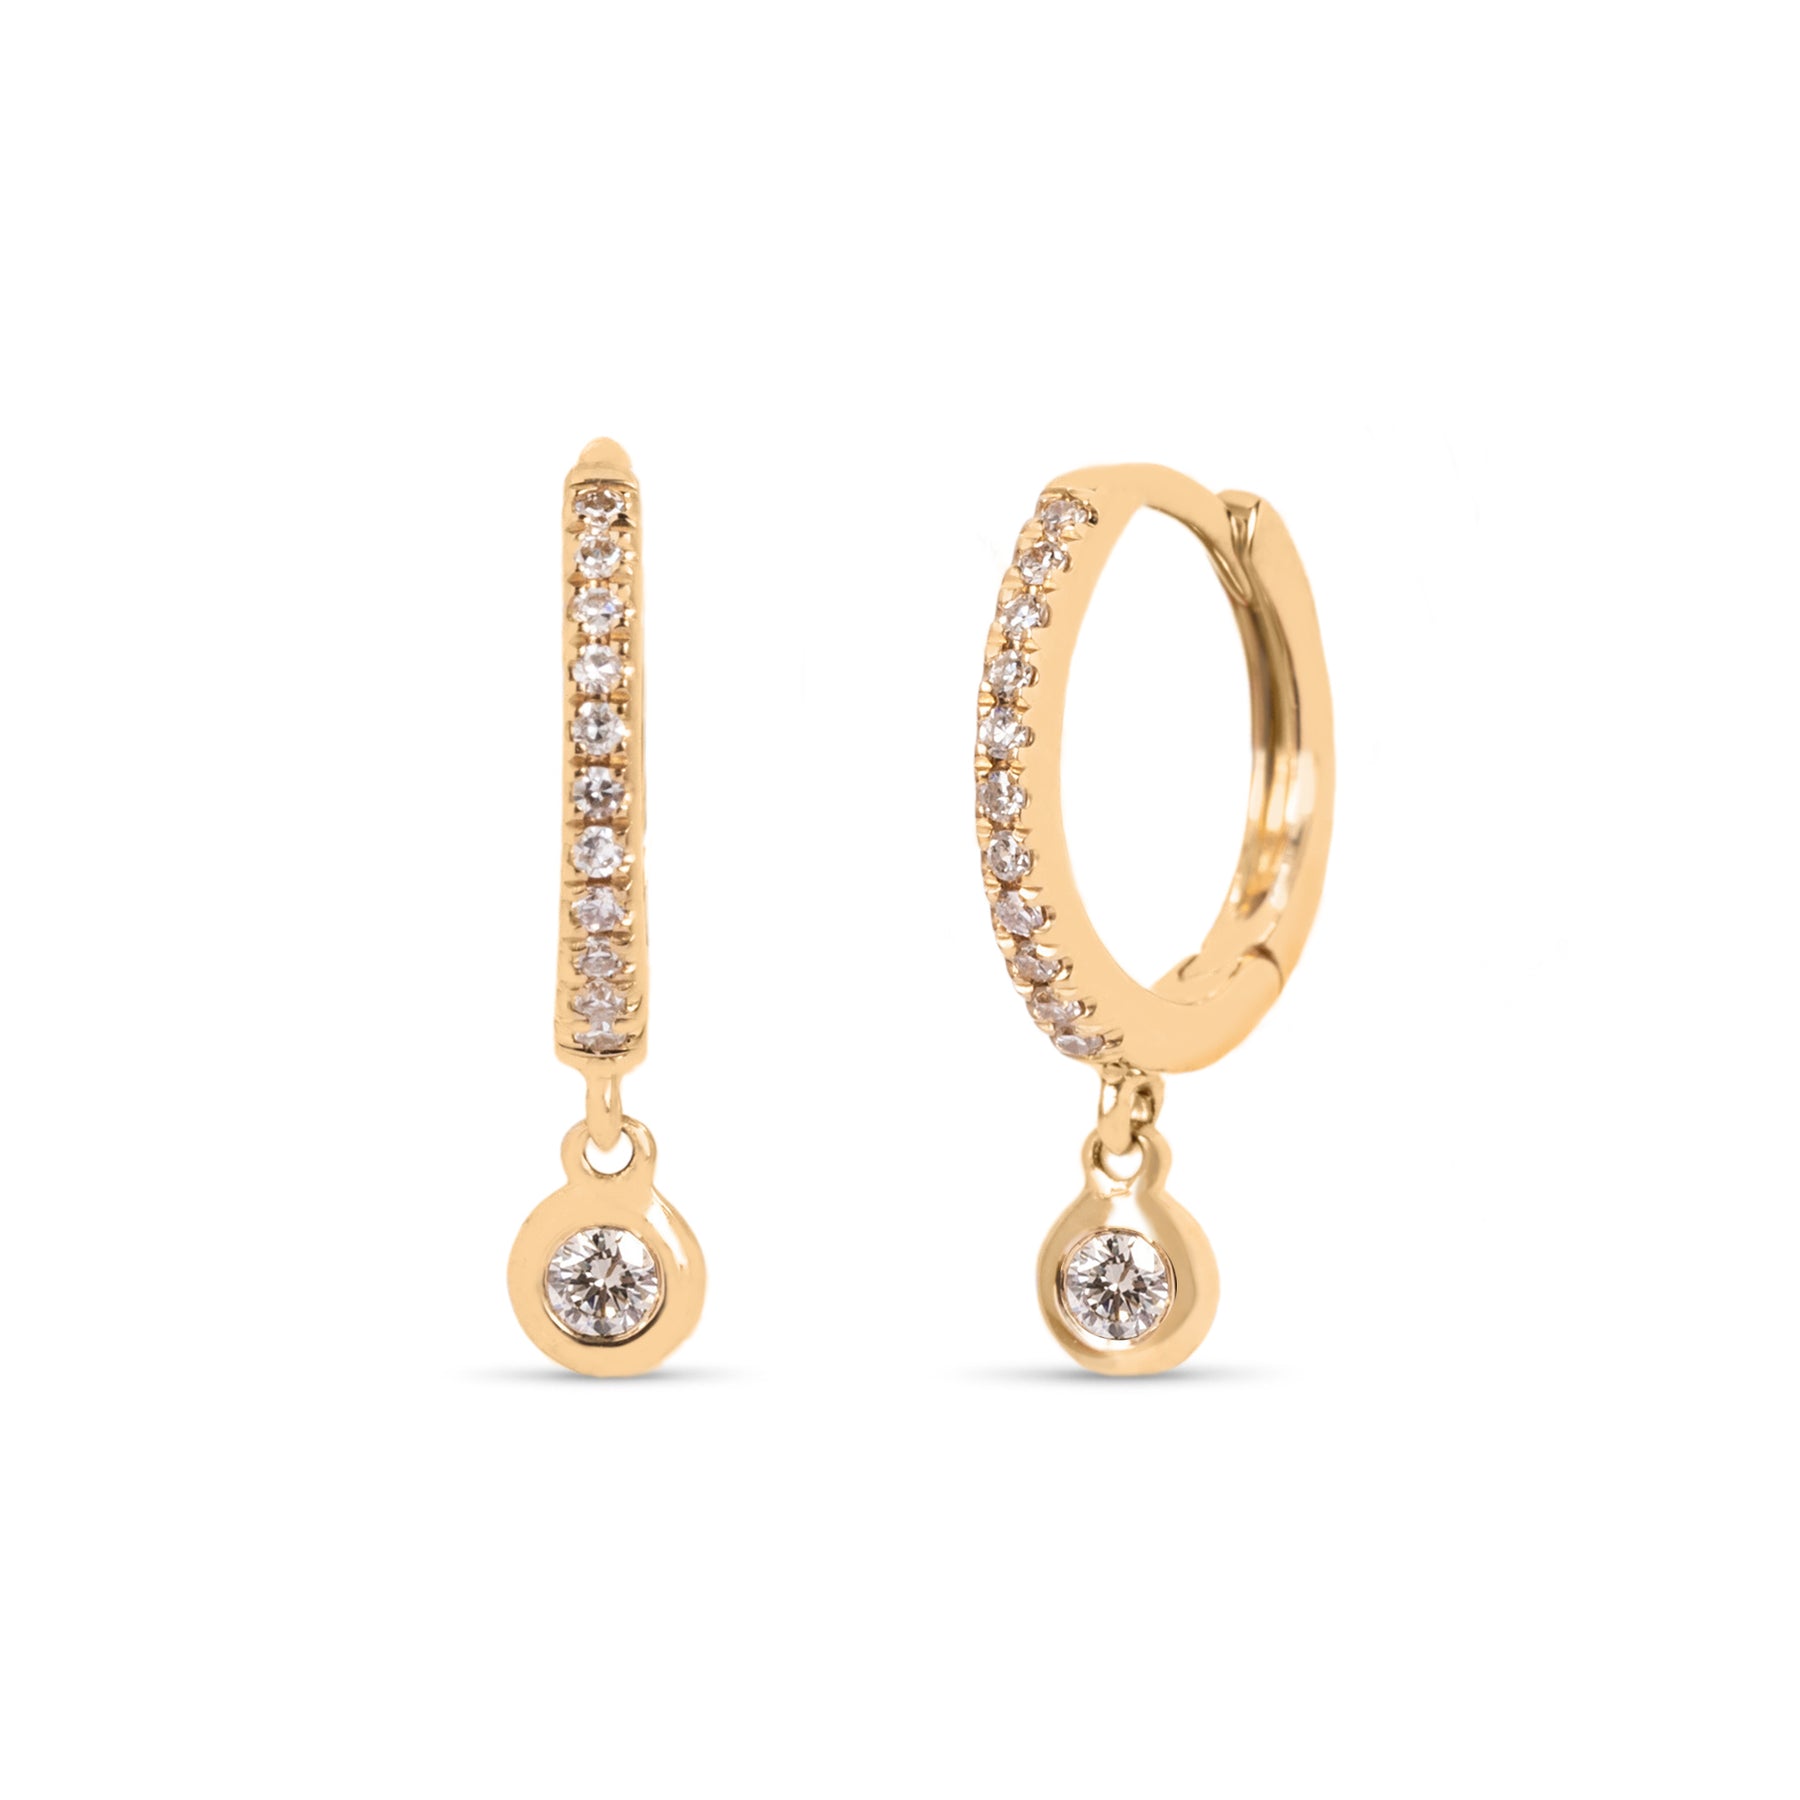 14k yellow gold diamond pave huggie hoops with diamond bezel dangle charm earrings